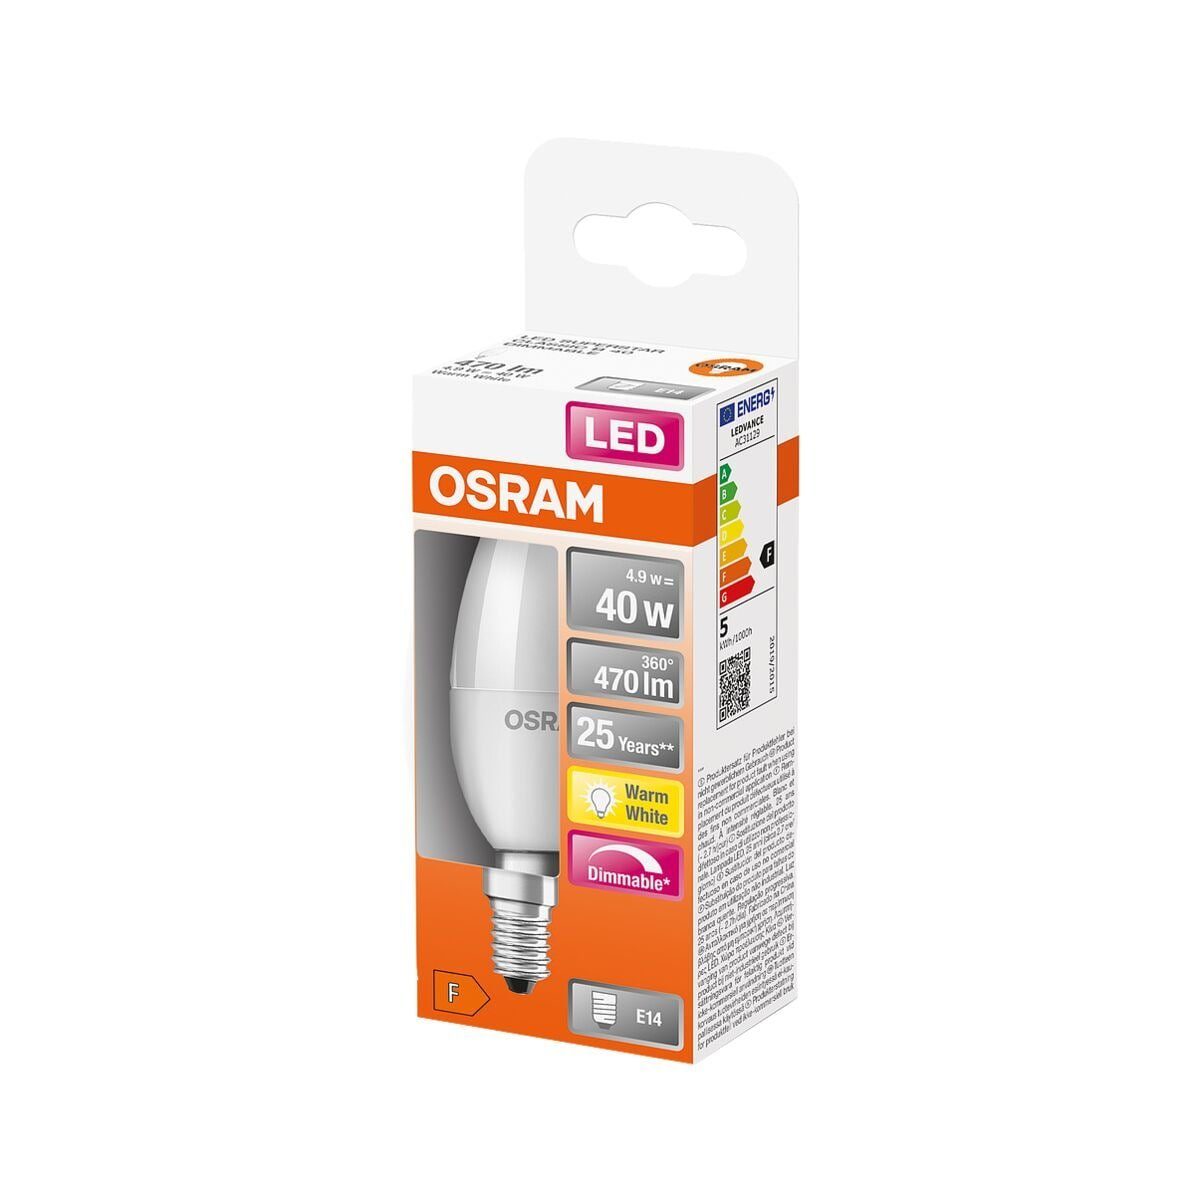 Osram LED-Leuchtmittel Superstar Classic B E14, Warm 5 White, dimmbar, W